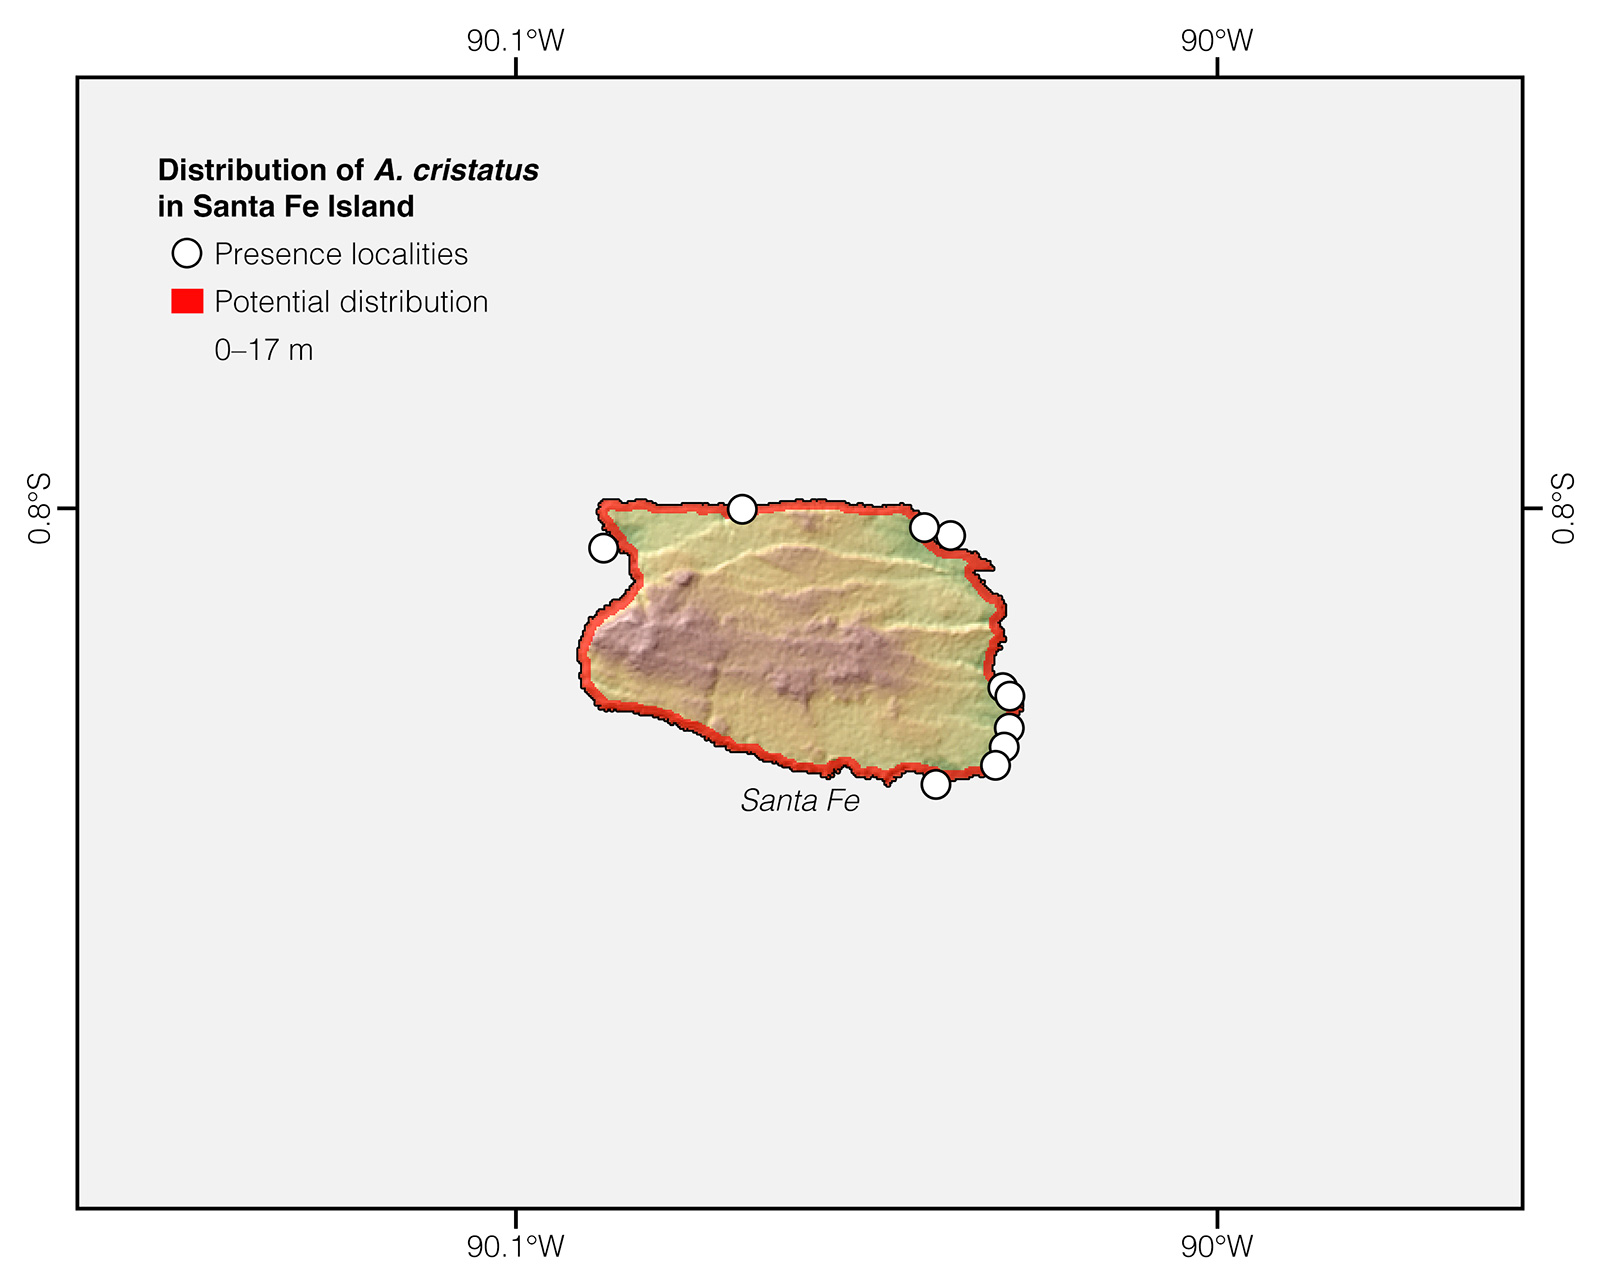 Distribution of Amblyrhynchus cristatus in Santa Fe Island